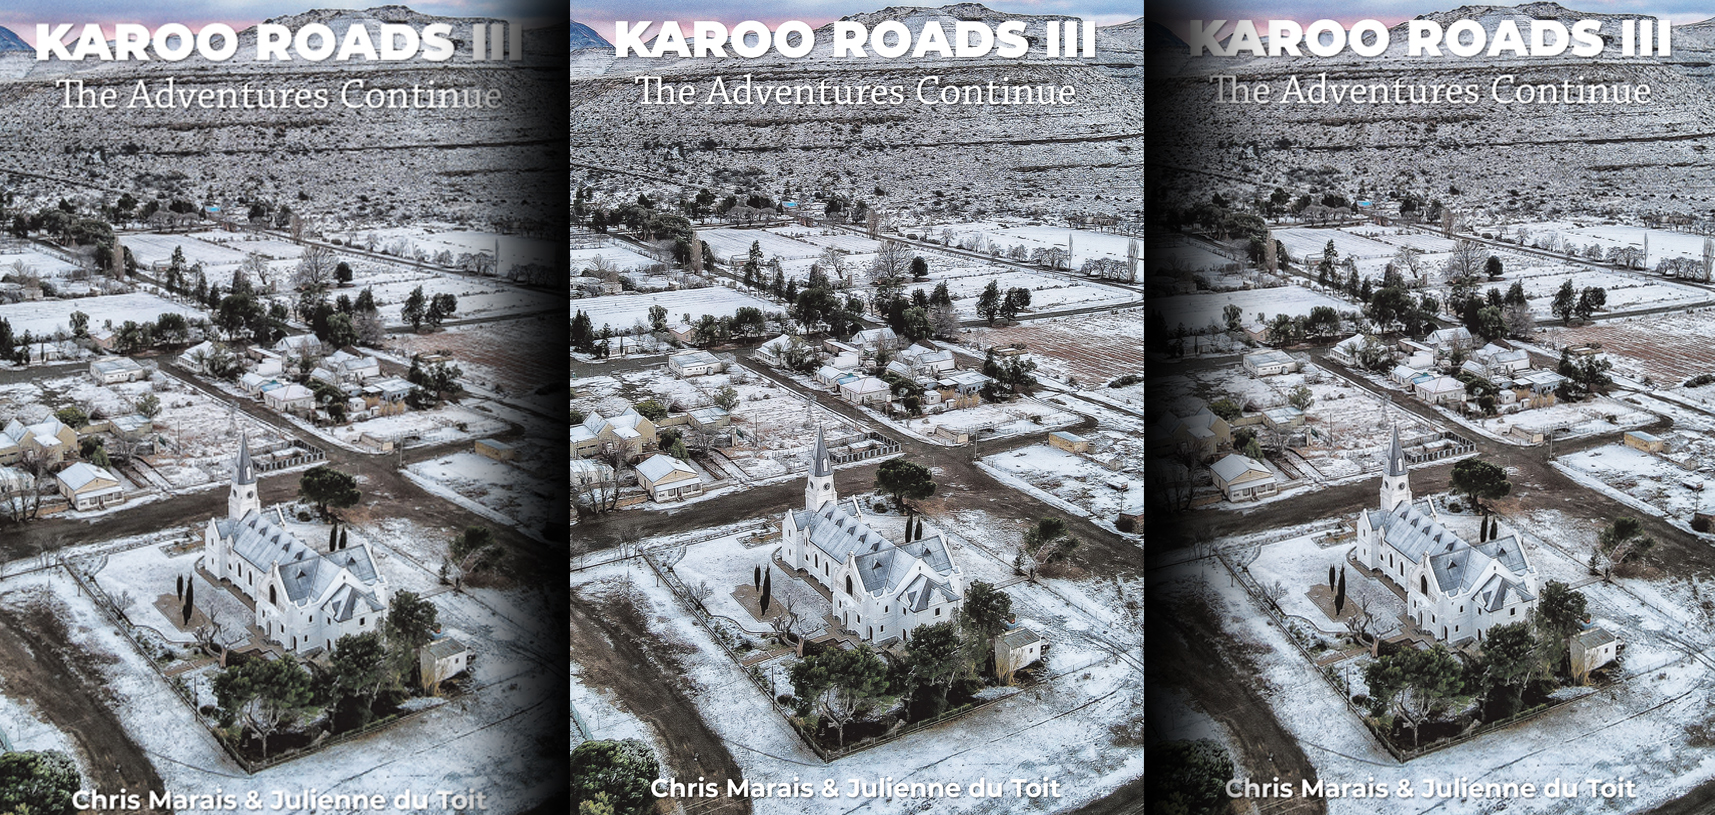 'Karoo Roads III' book cover. Image: Supplied